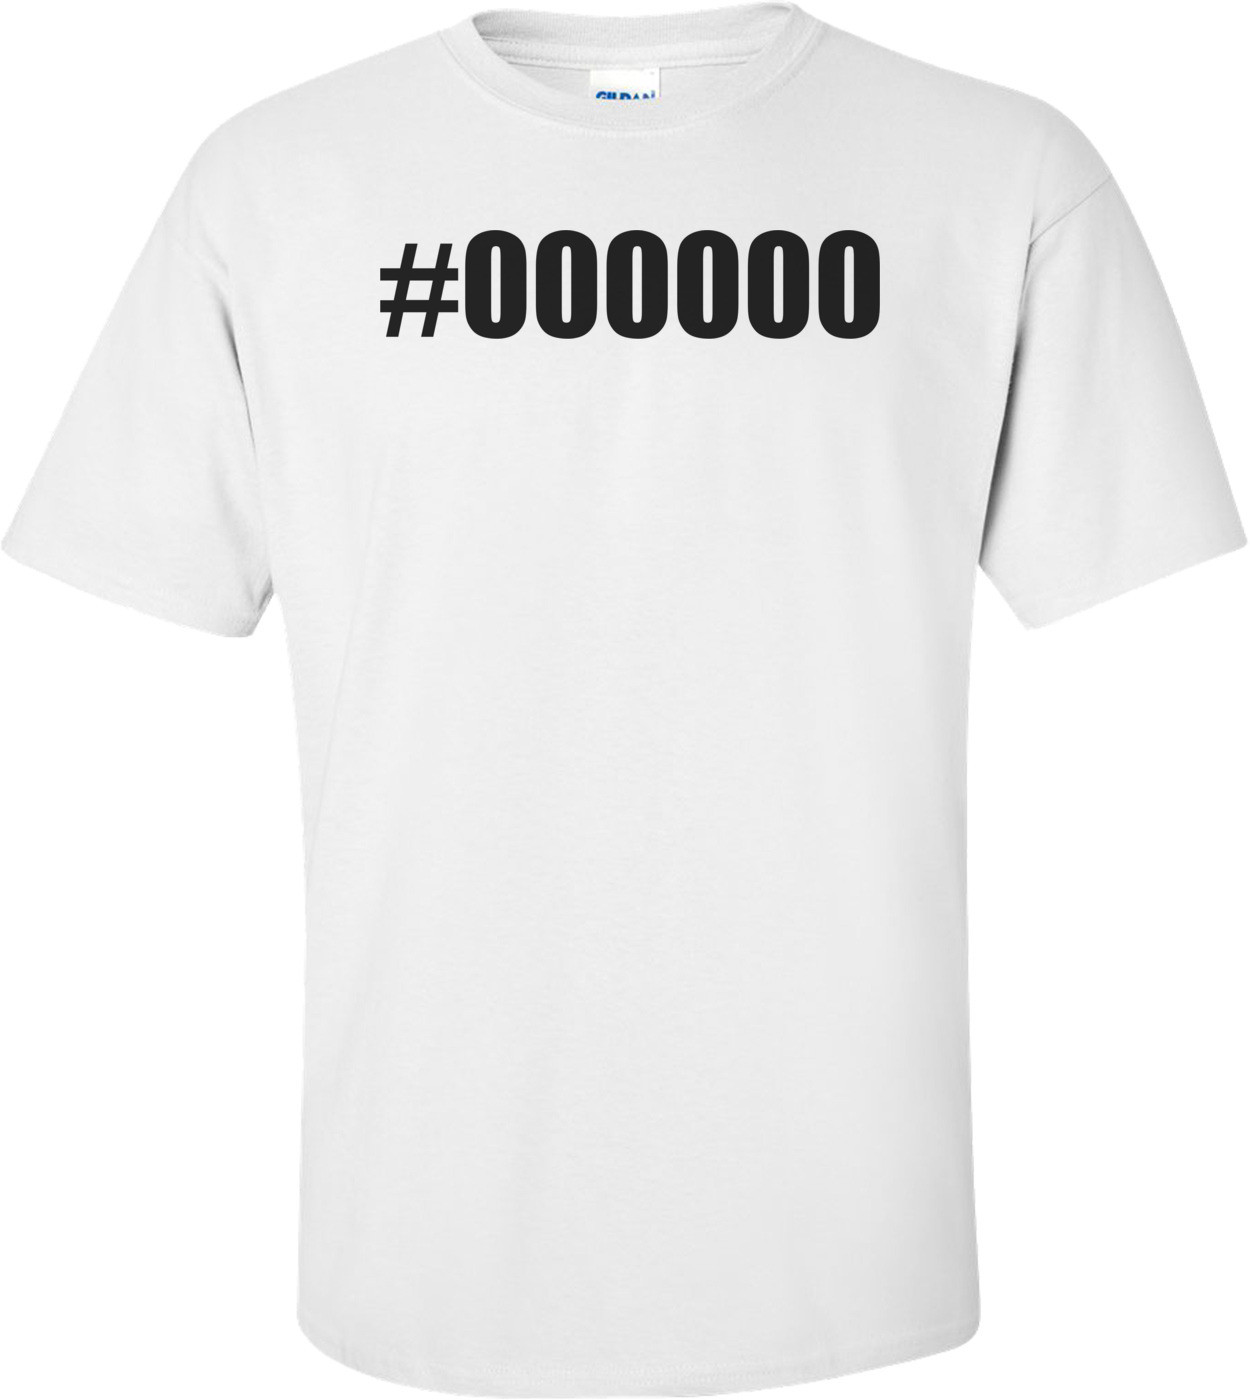 #000000 Shirt